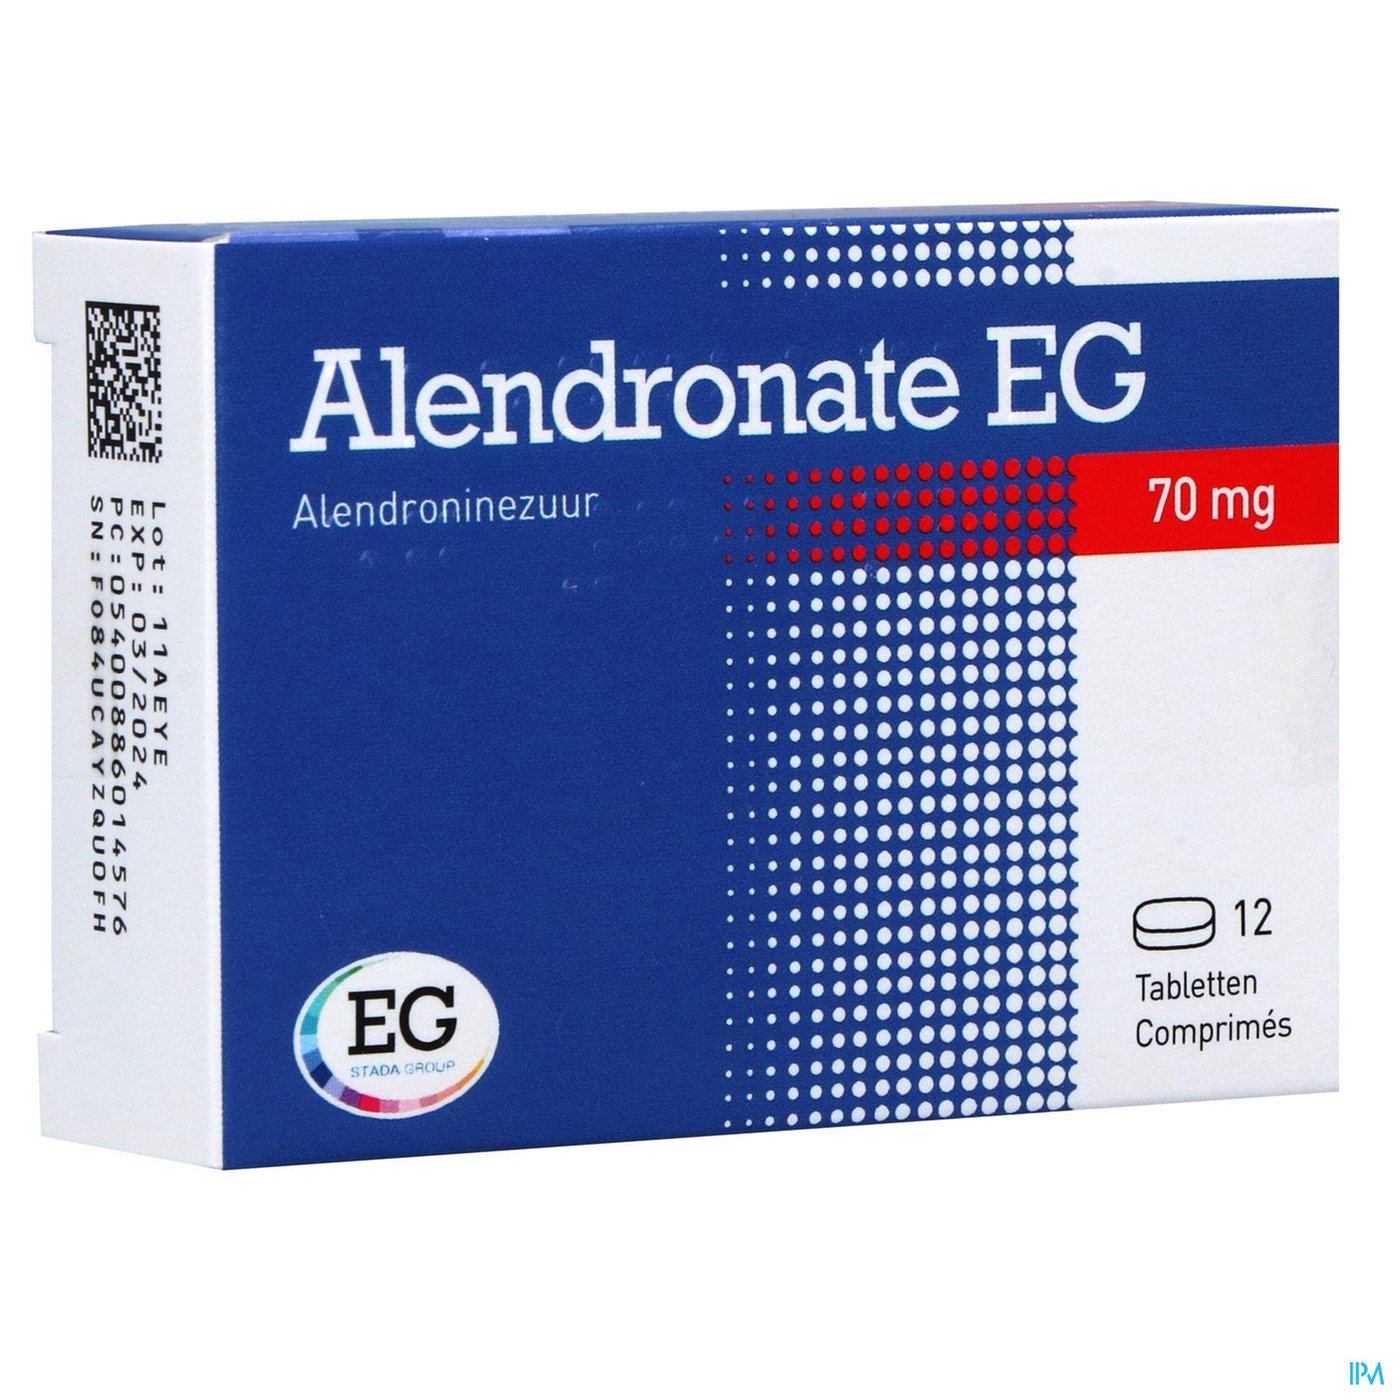 Alendronate EG Pi Pharma 70Mg Comp 12X70Mg Pip packshot